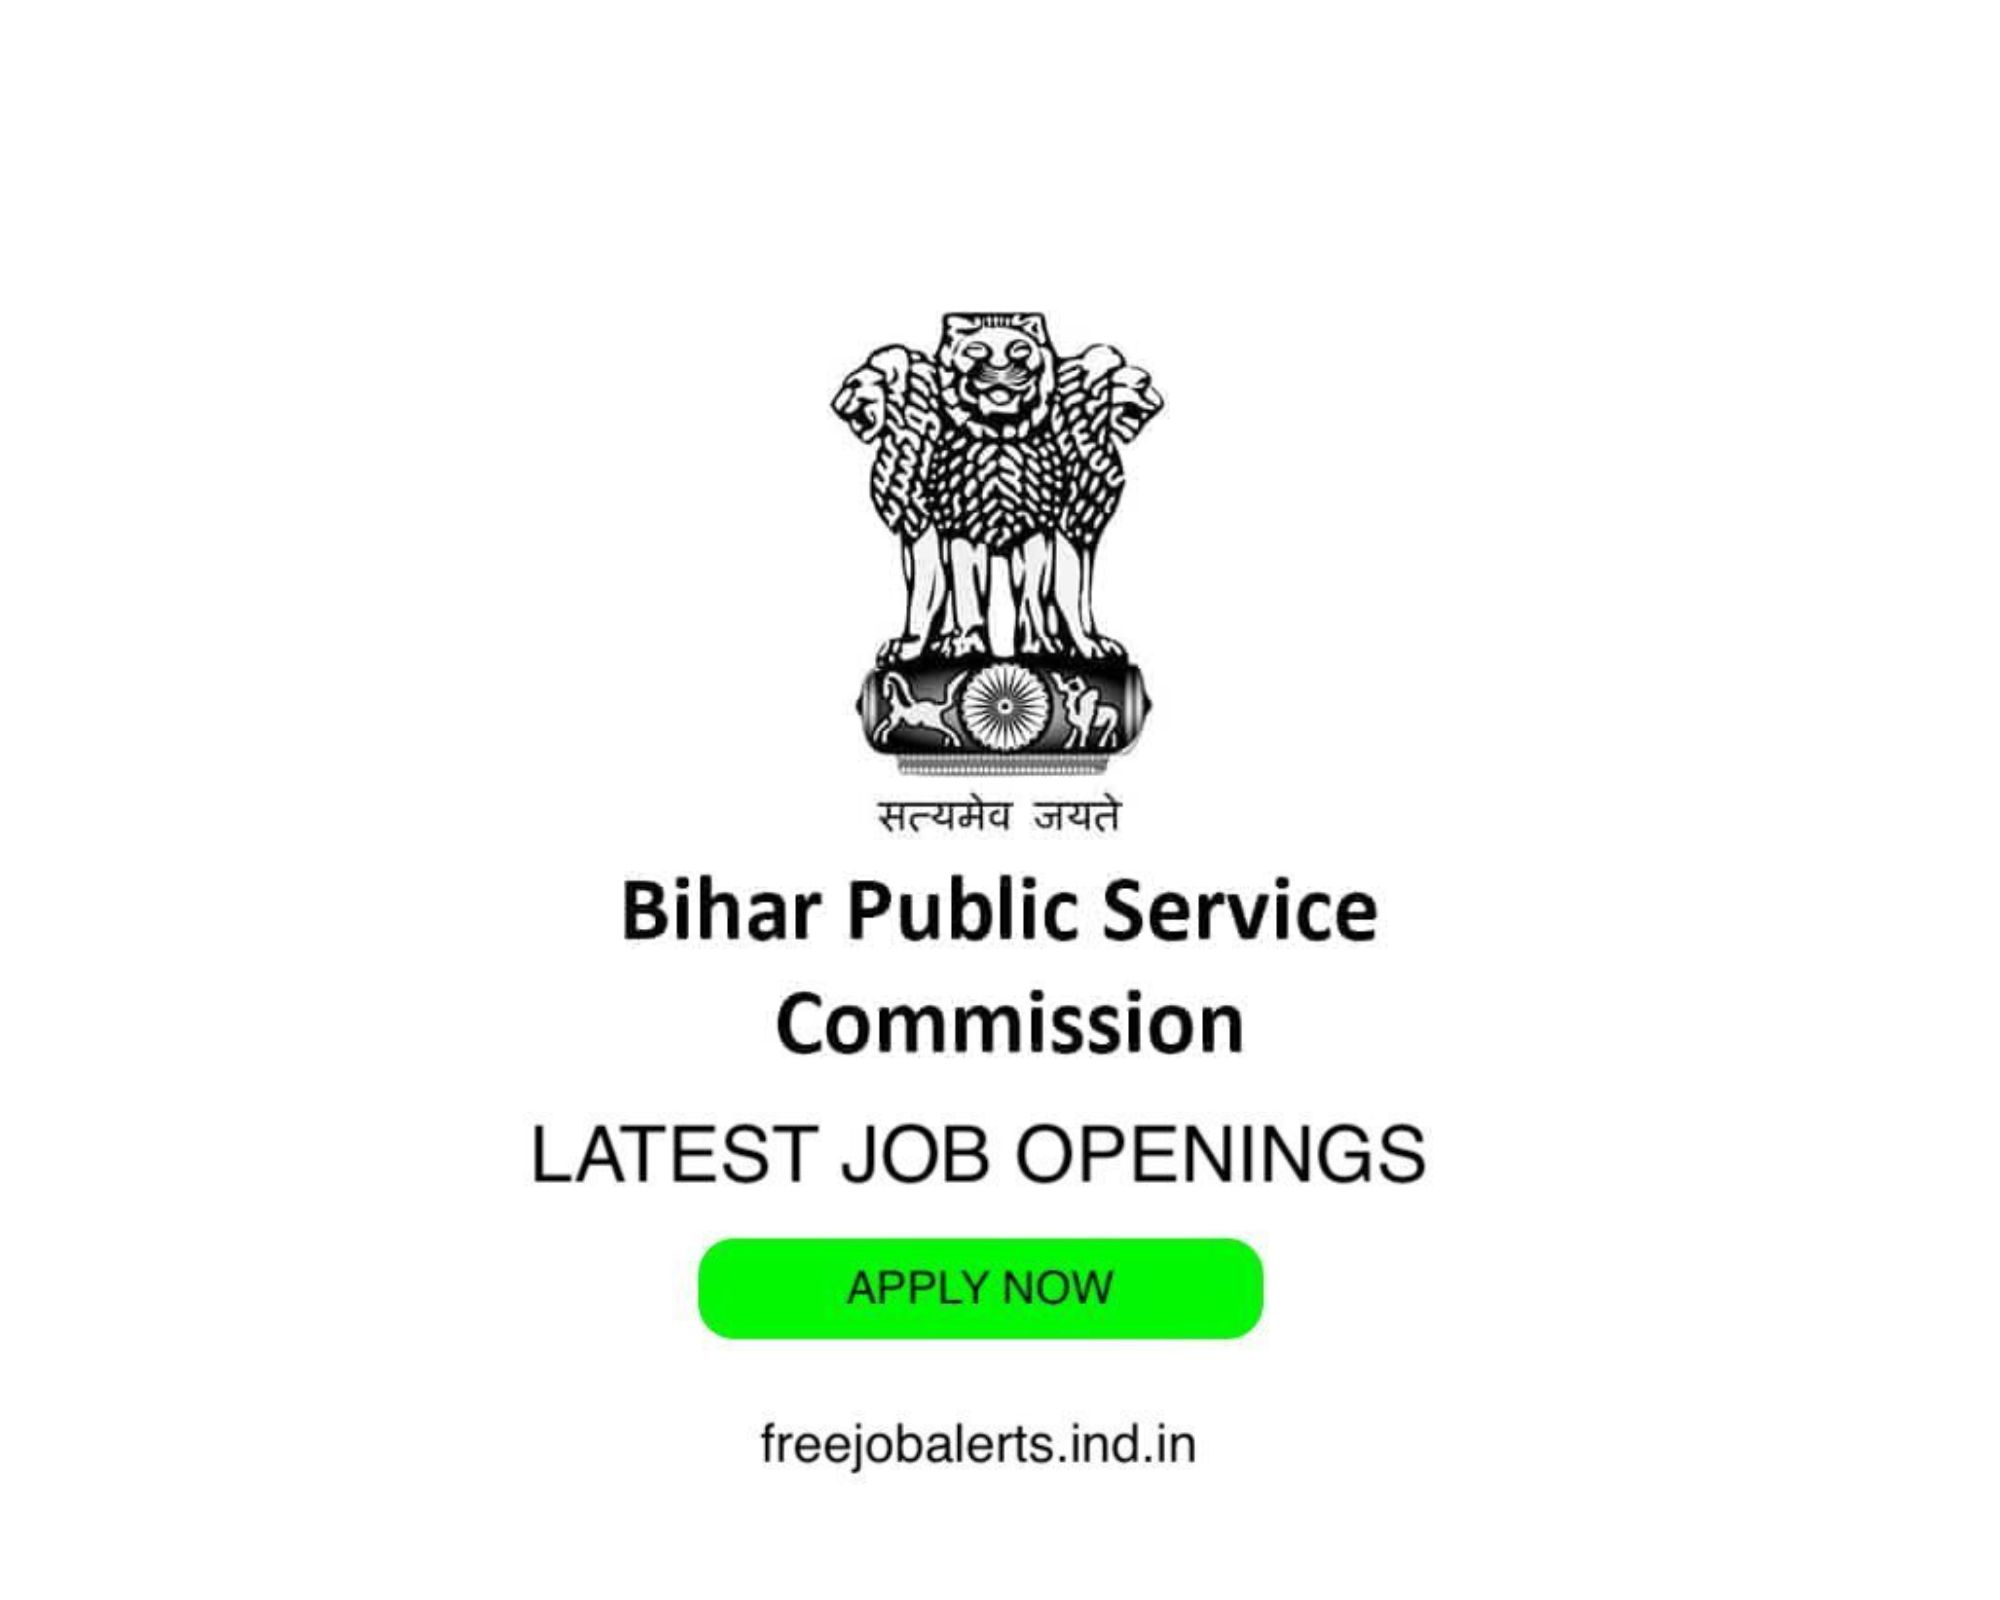 BSPC - Bihar Public Service Commission - Latest Govt job openings - Free job alerts, Indian Govt Jobs